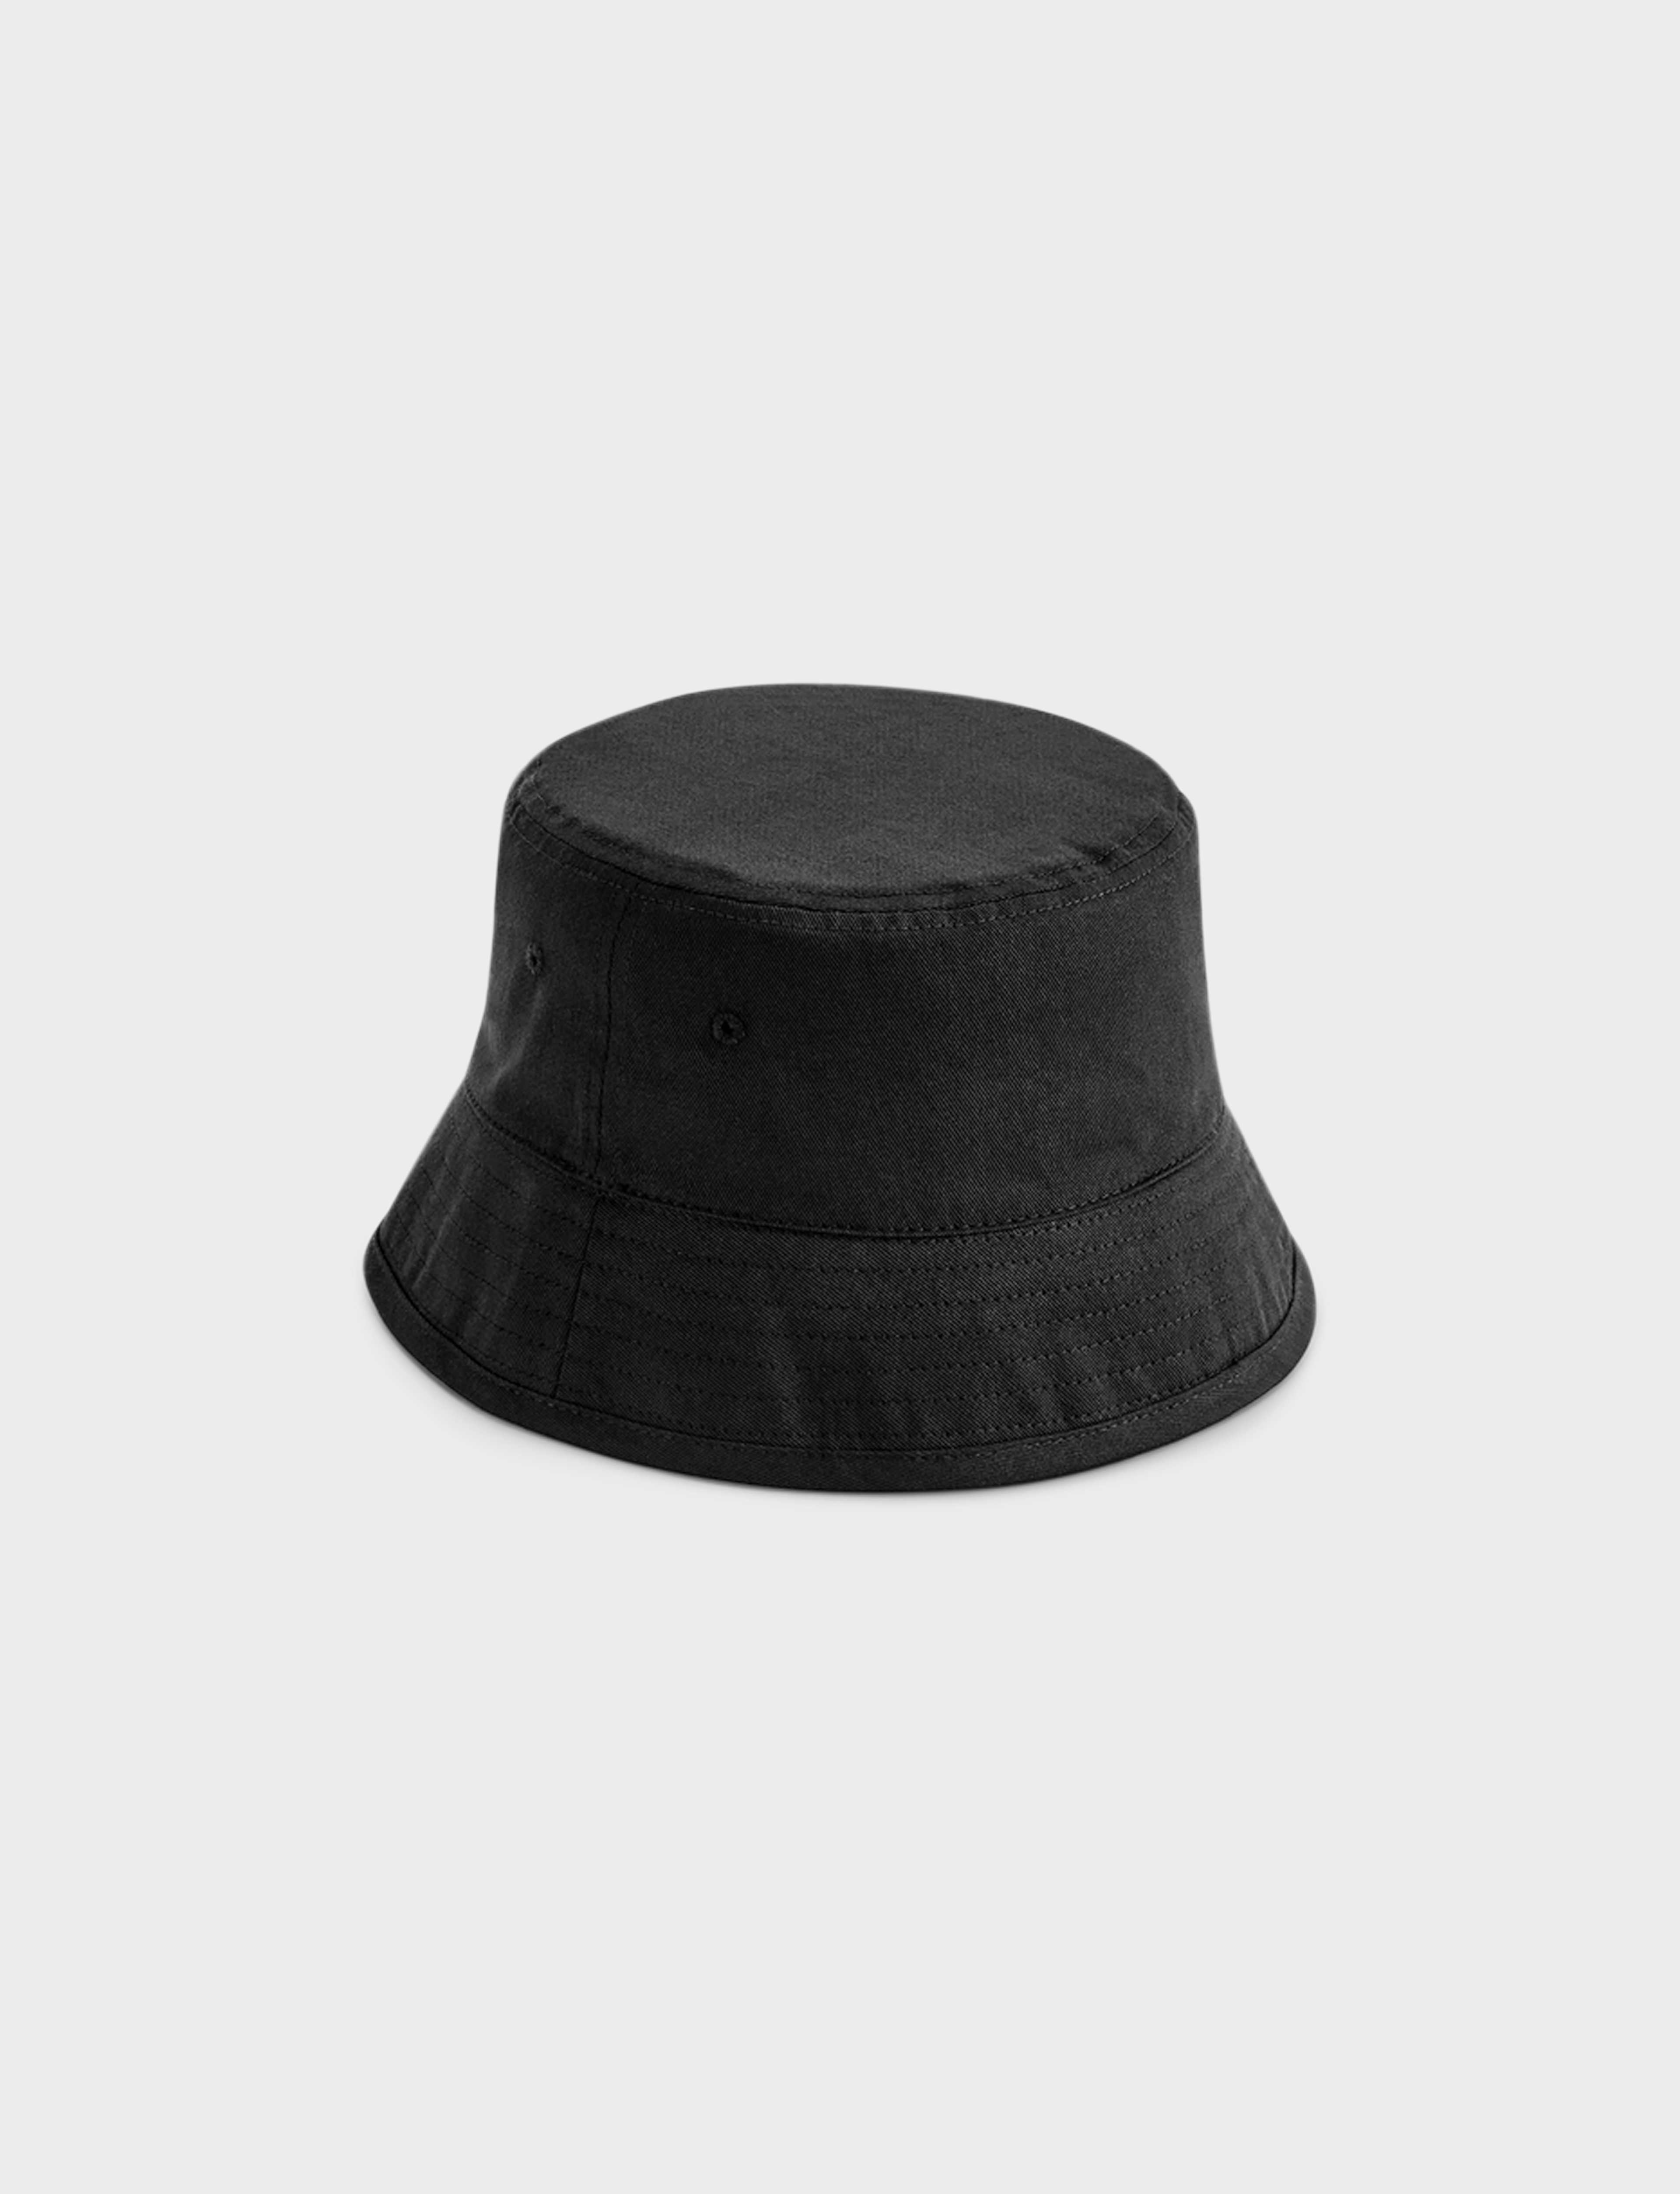 Organic Bucket Hat